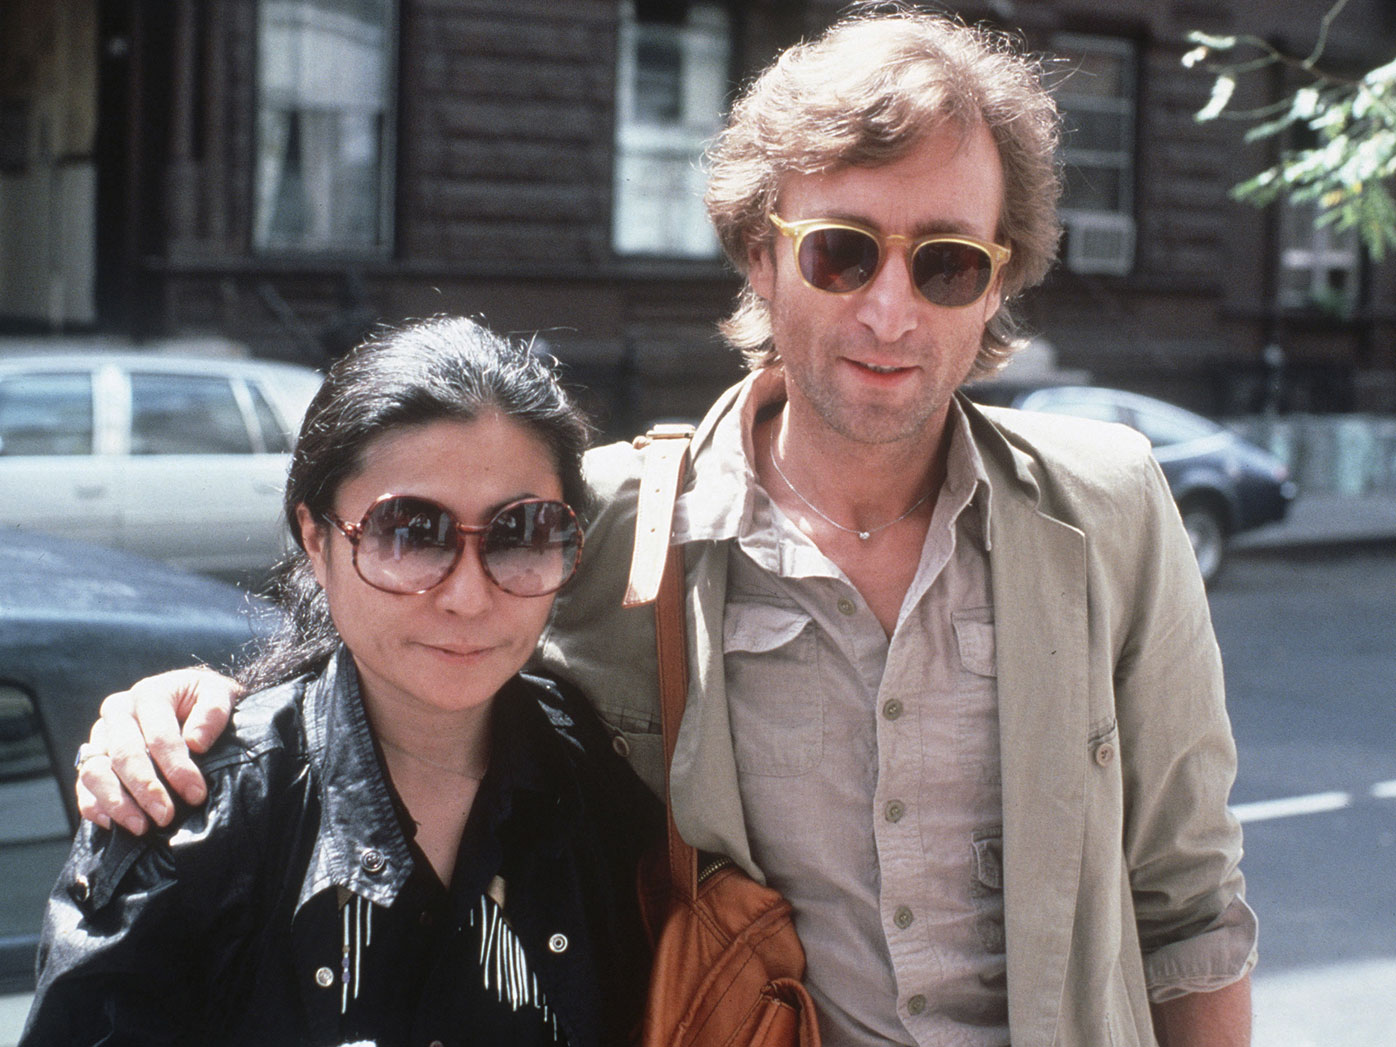 John Lennon and Yoko Ono in New York, 1980